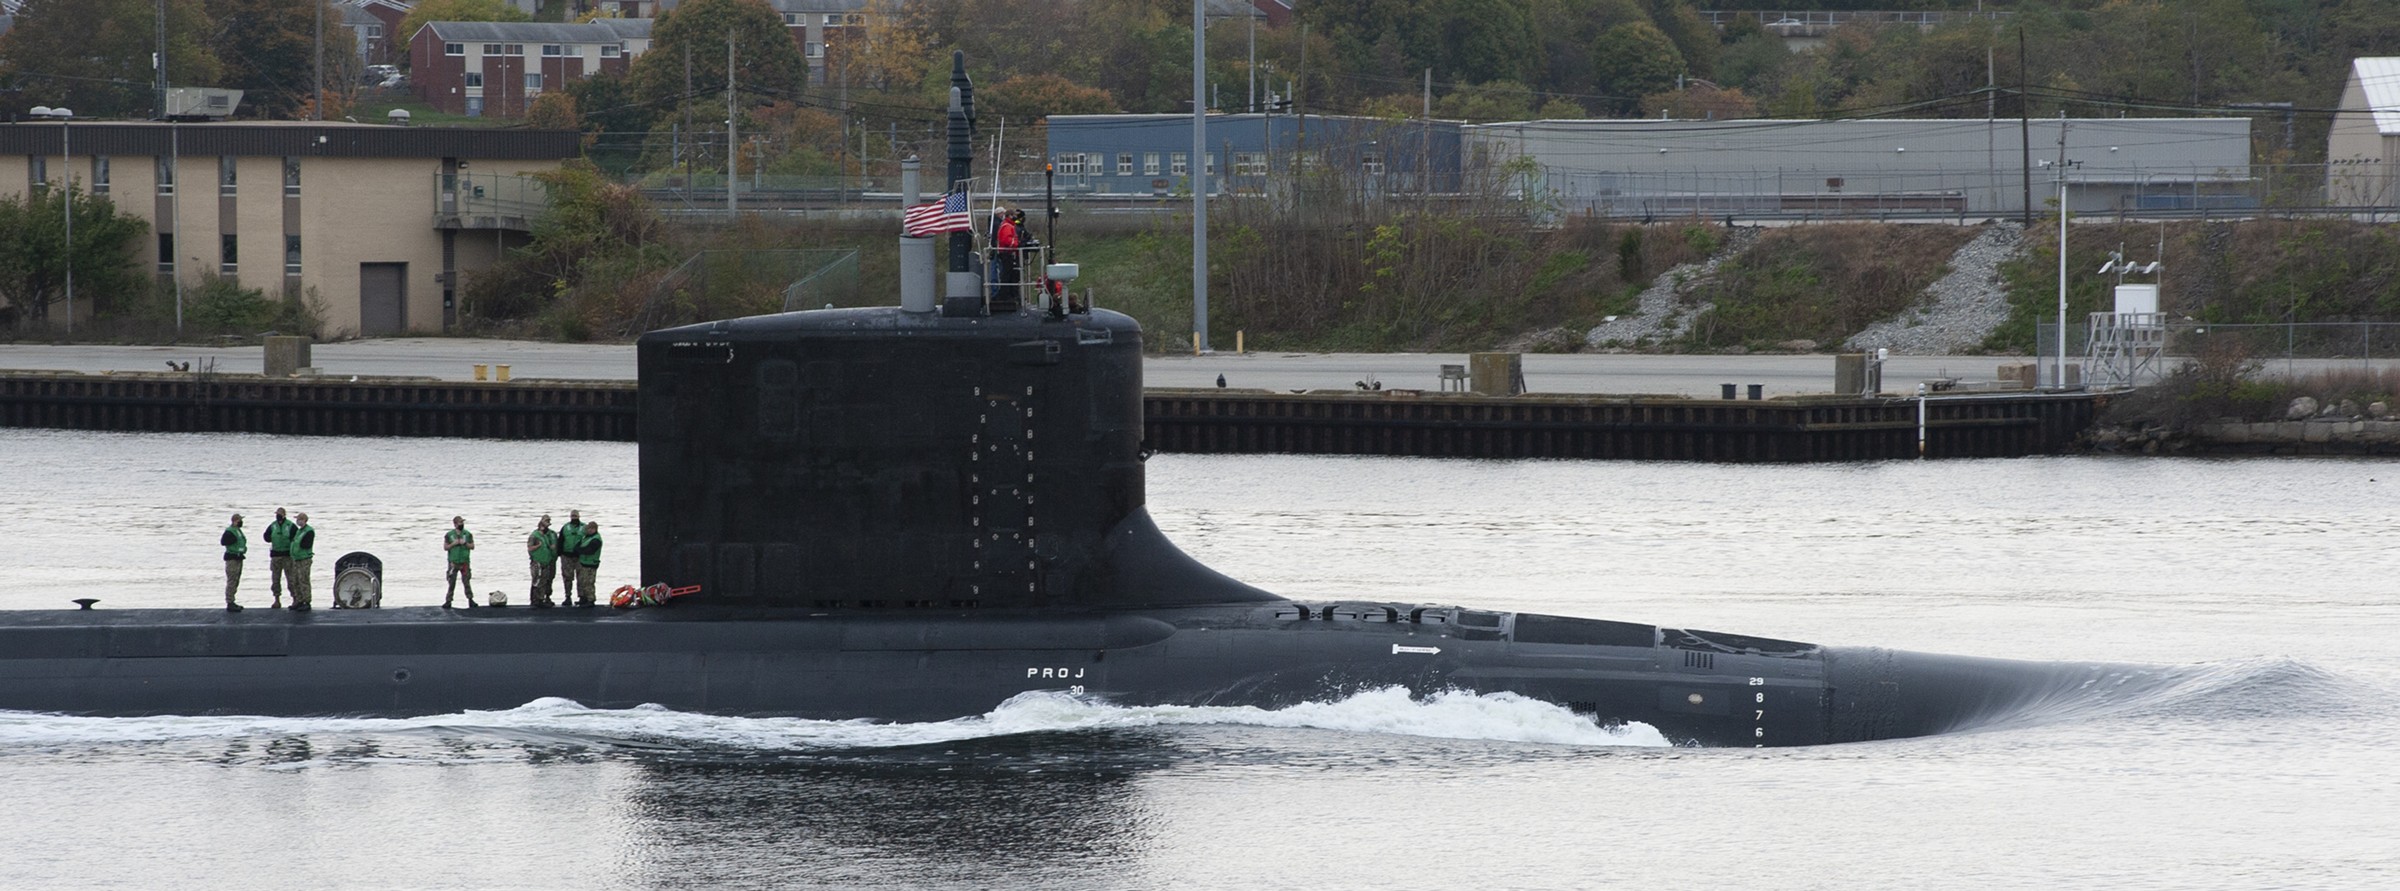 ssn-792 uss vermont virginia class attack submarine us navy 08 subase new london groton connecticut